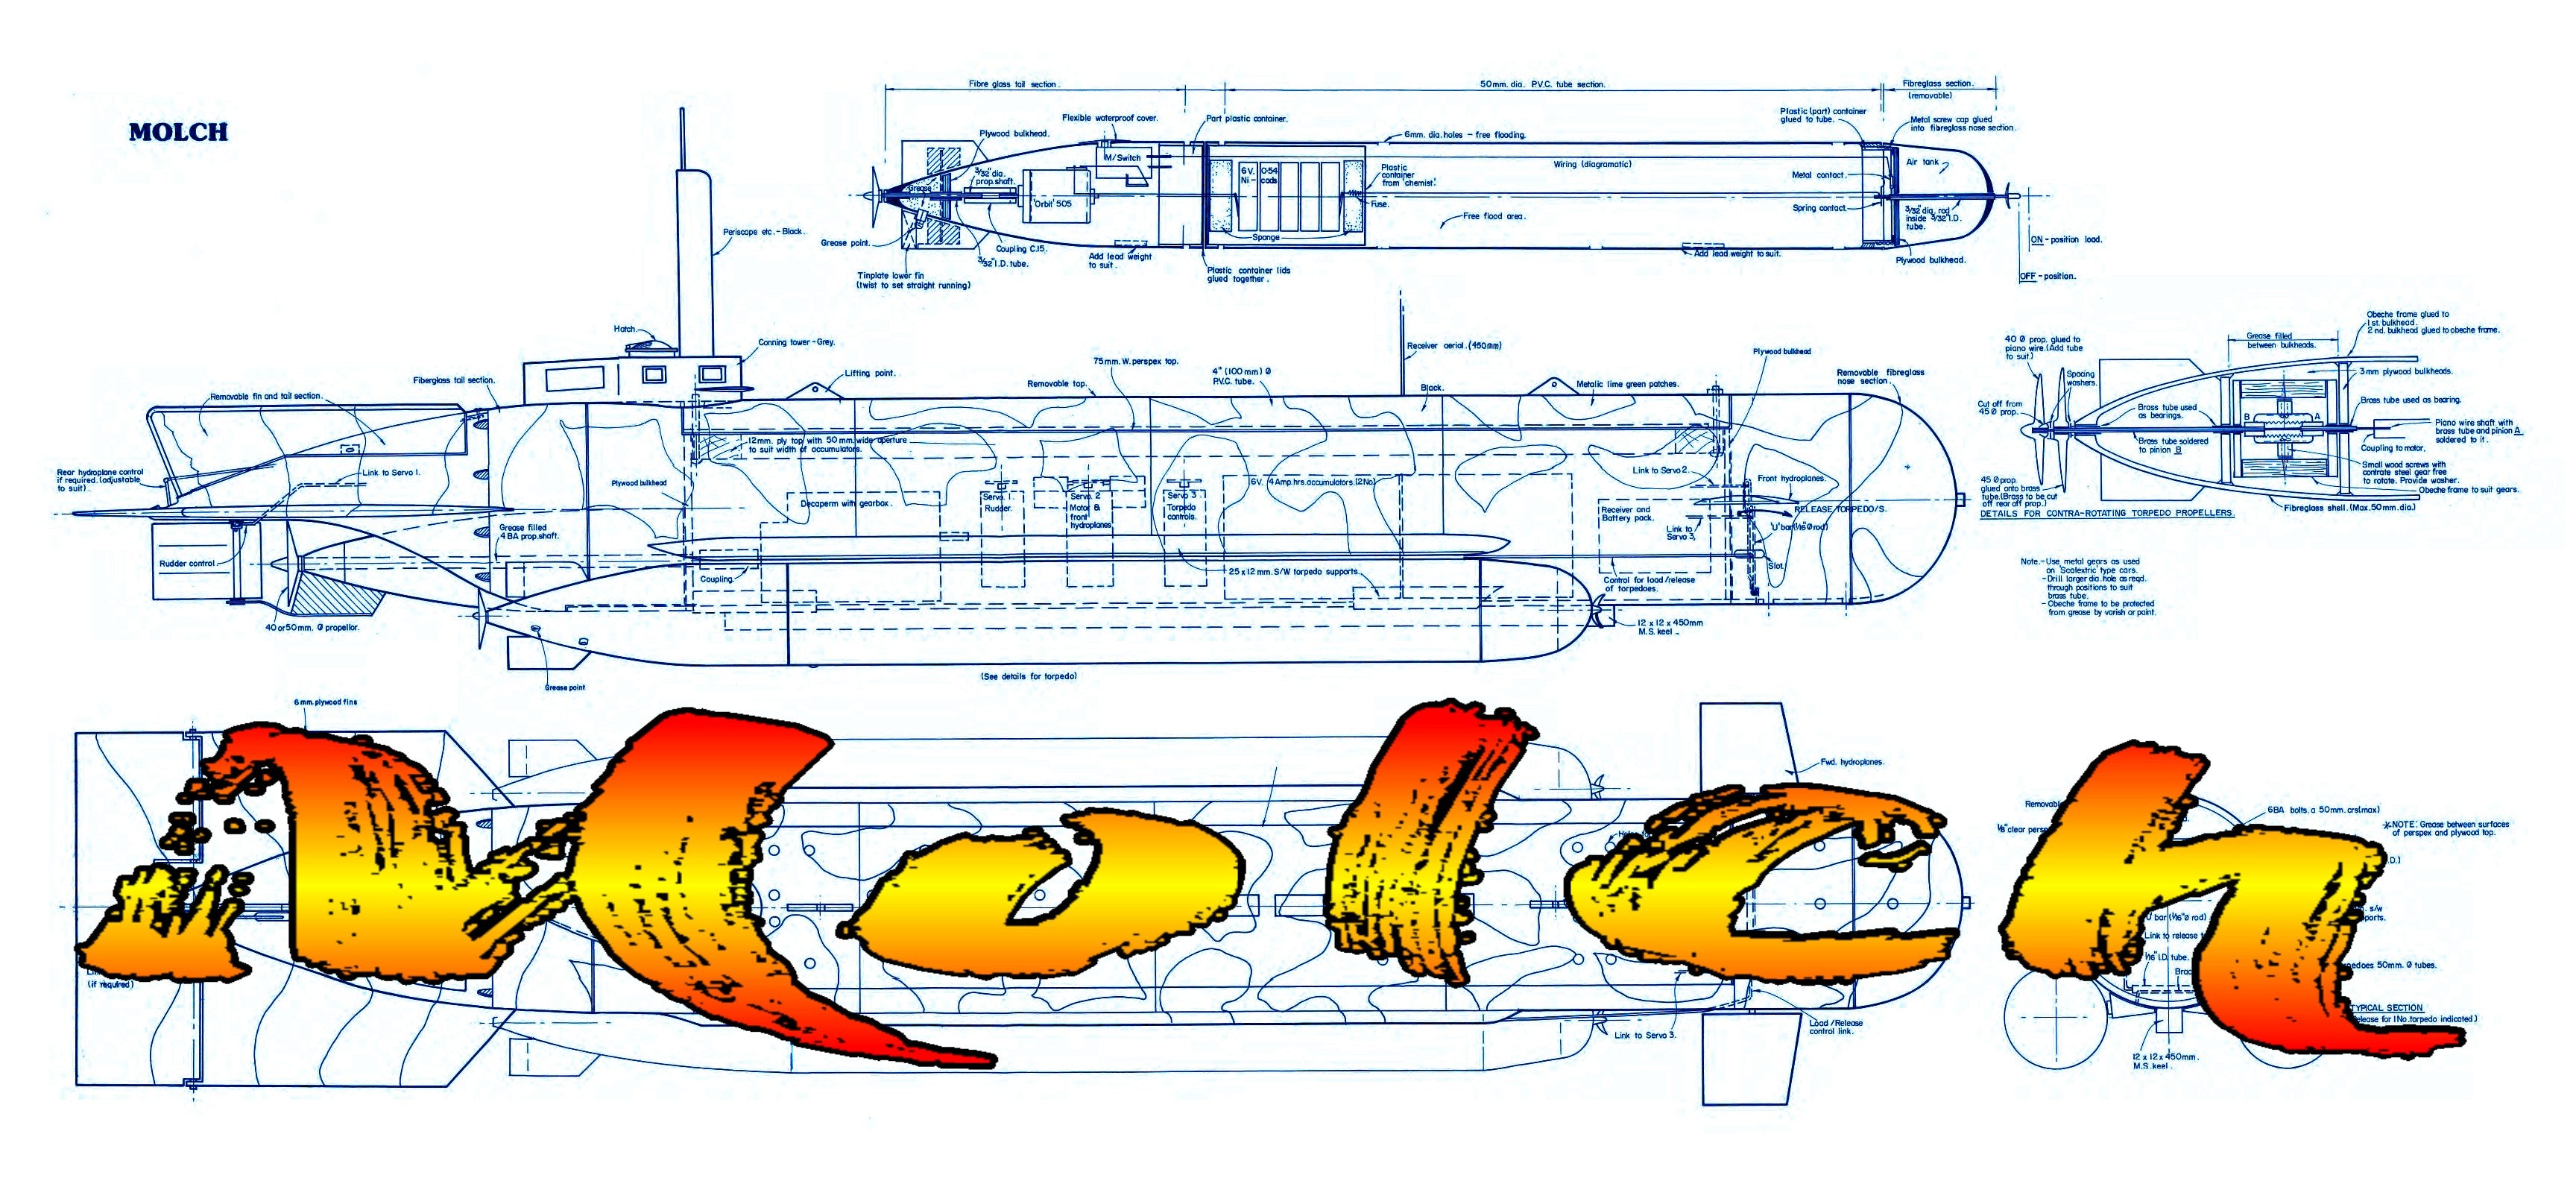 midget submarine blueprints